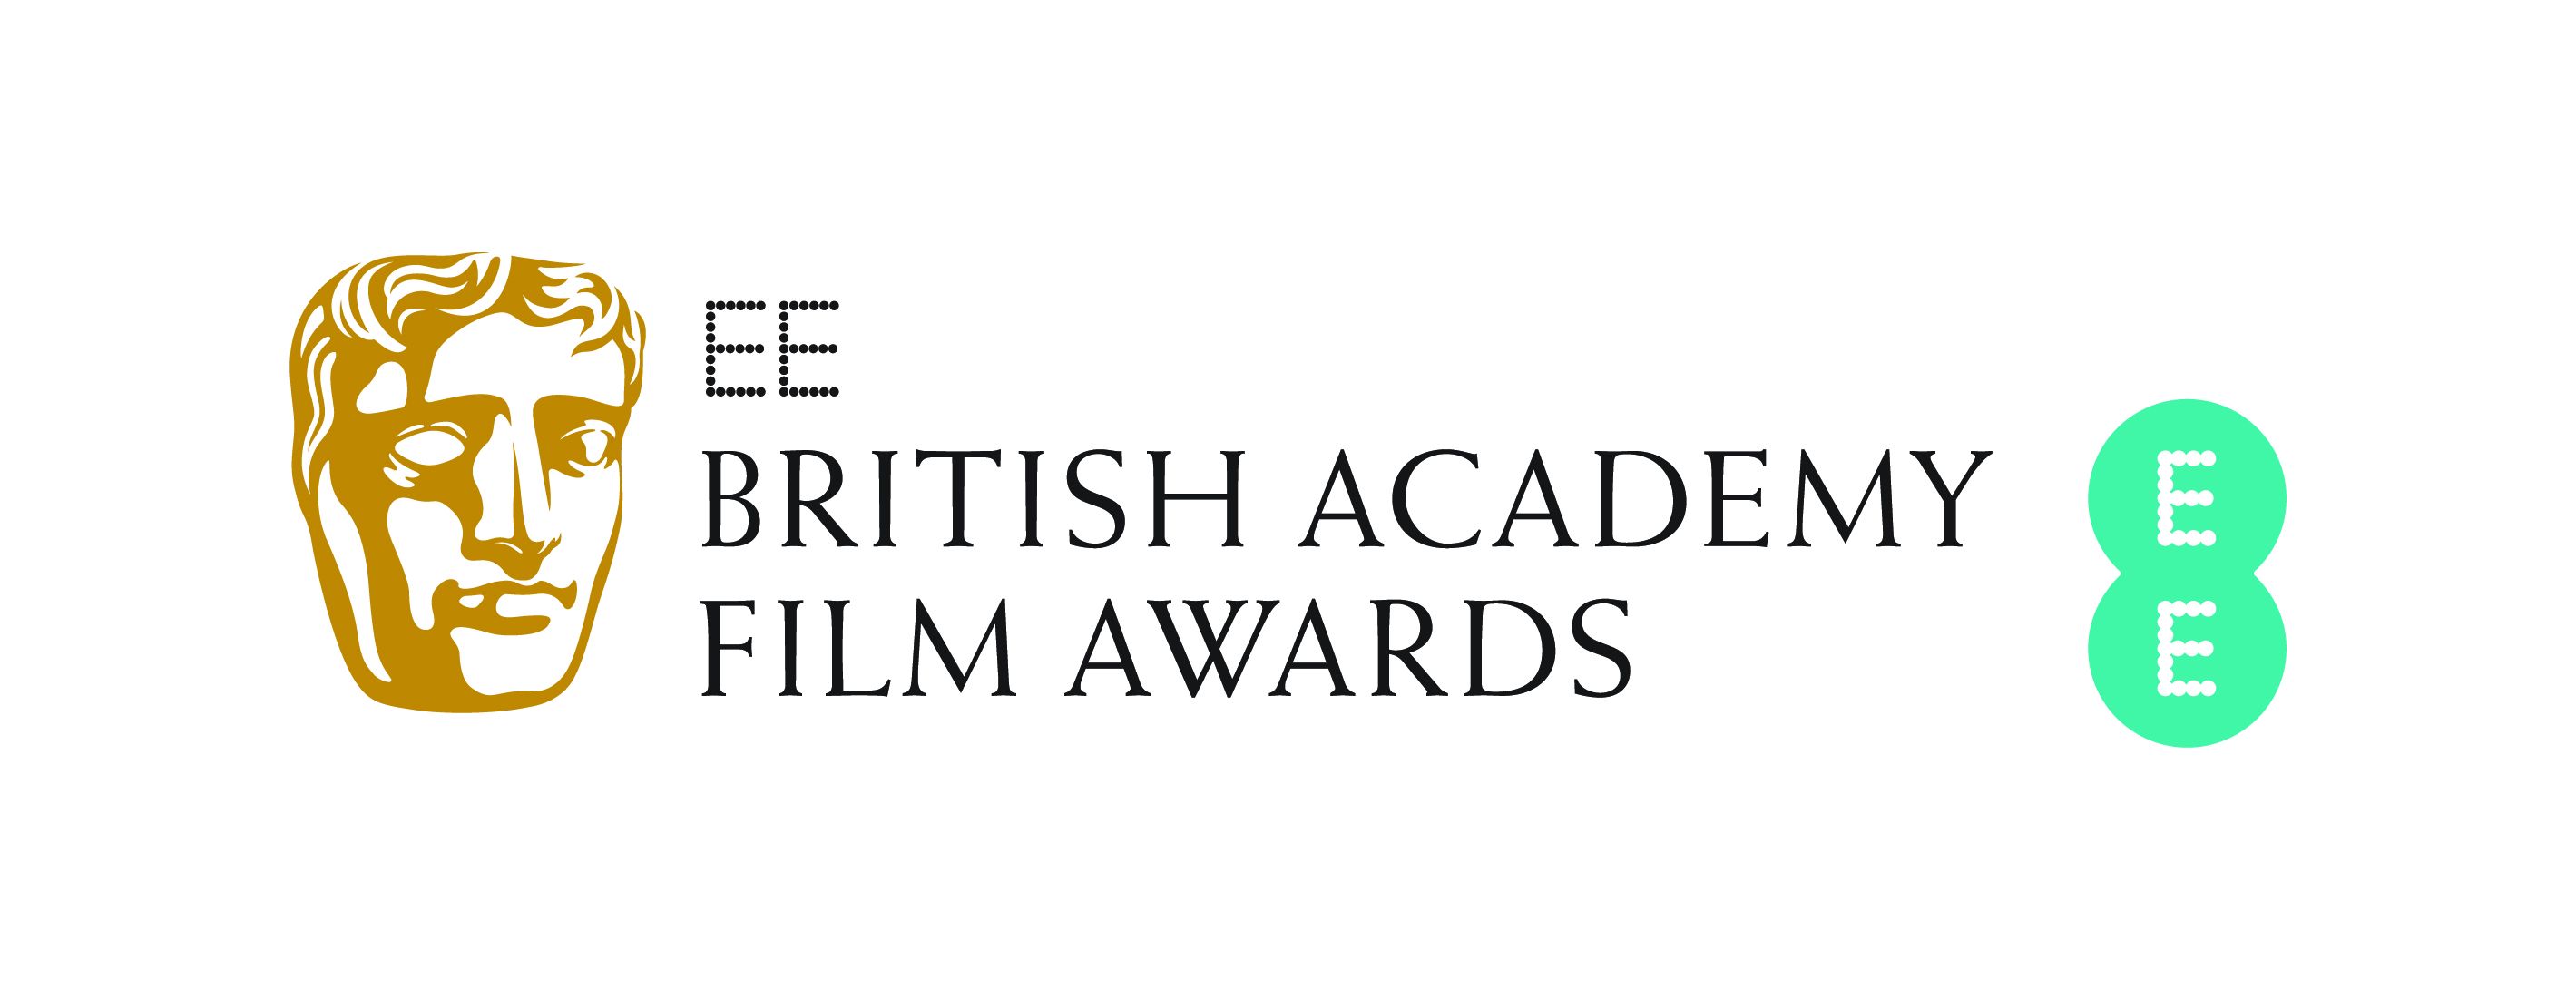 2014 BAFTAs: Complete list of winners